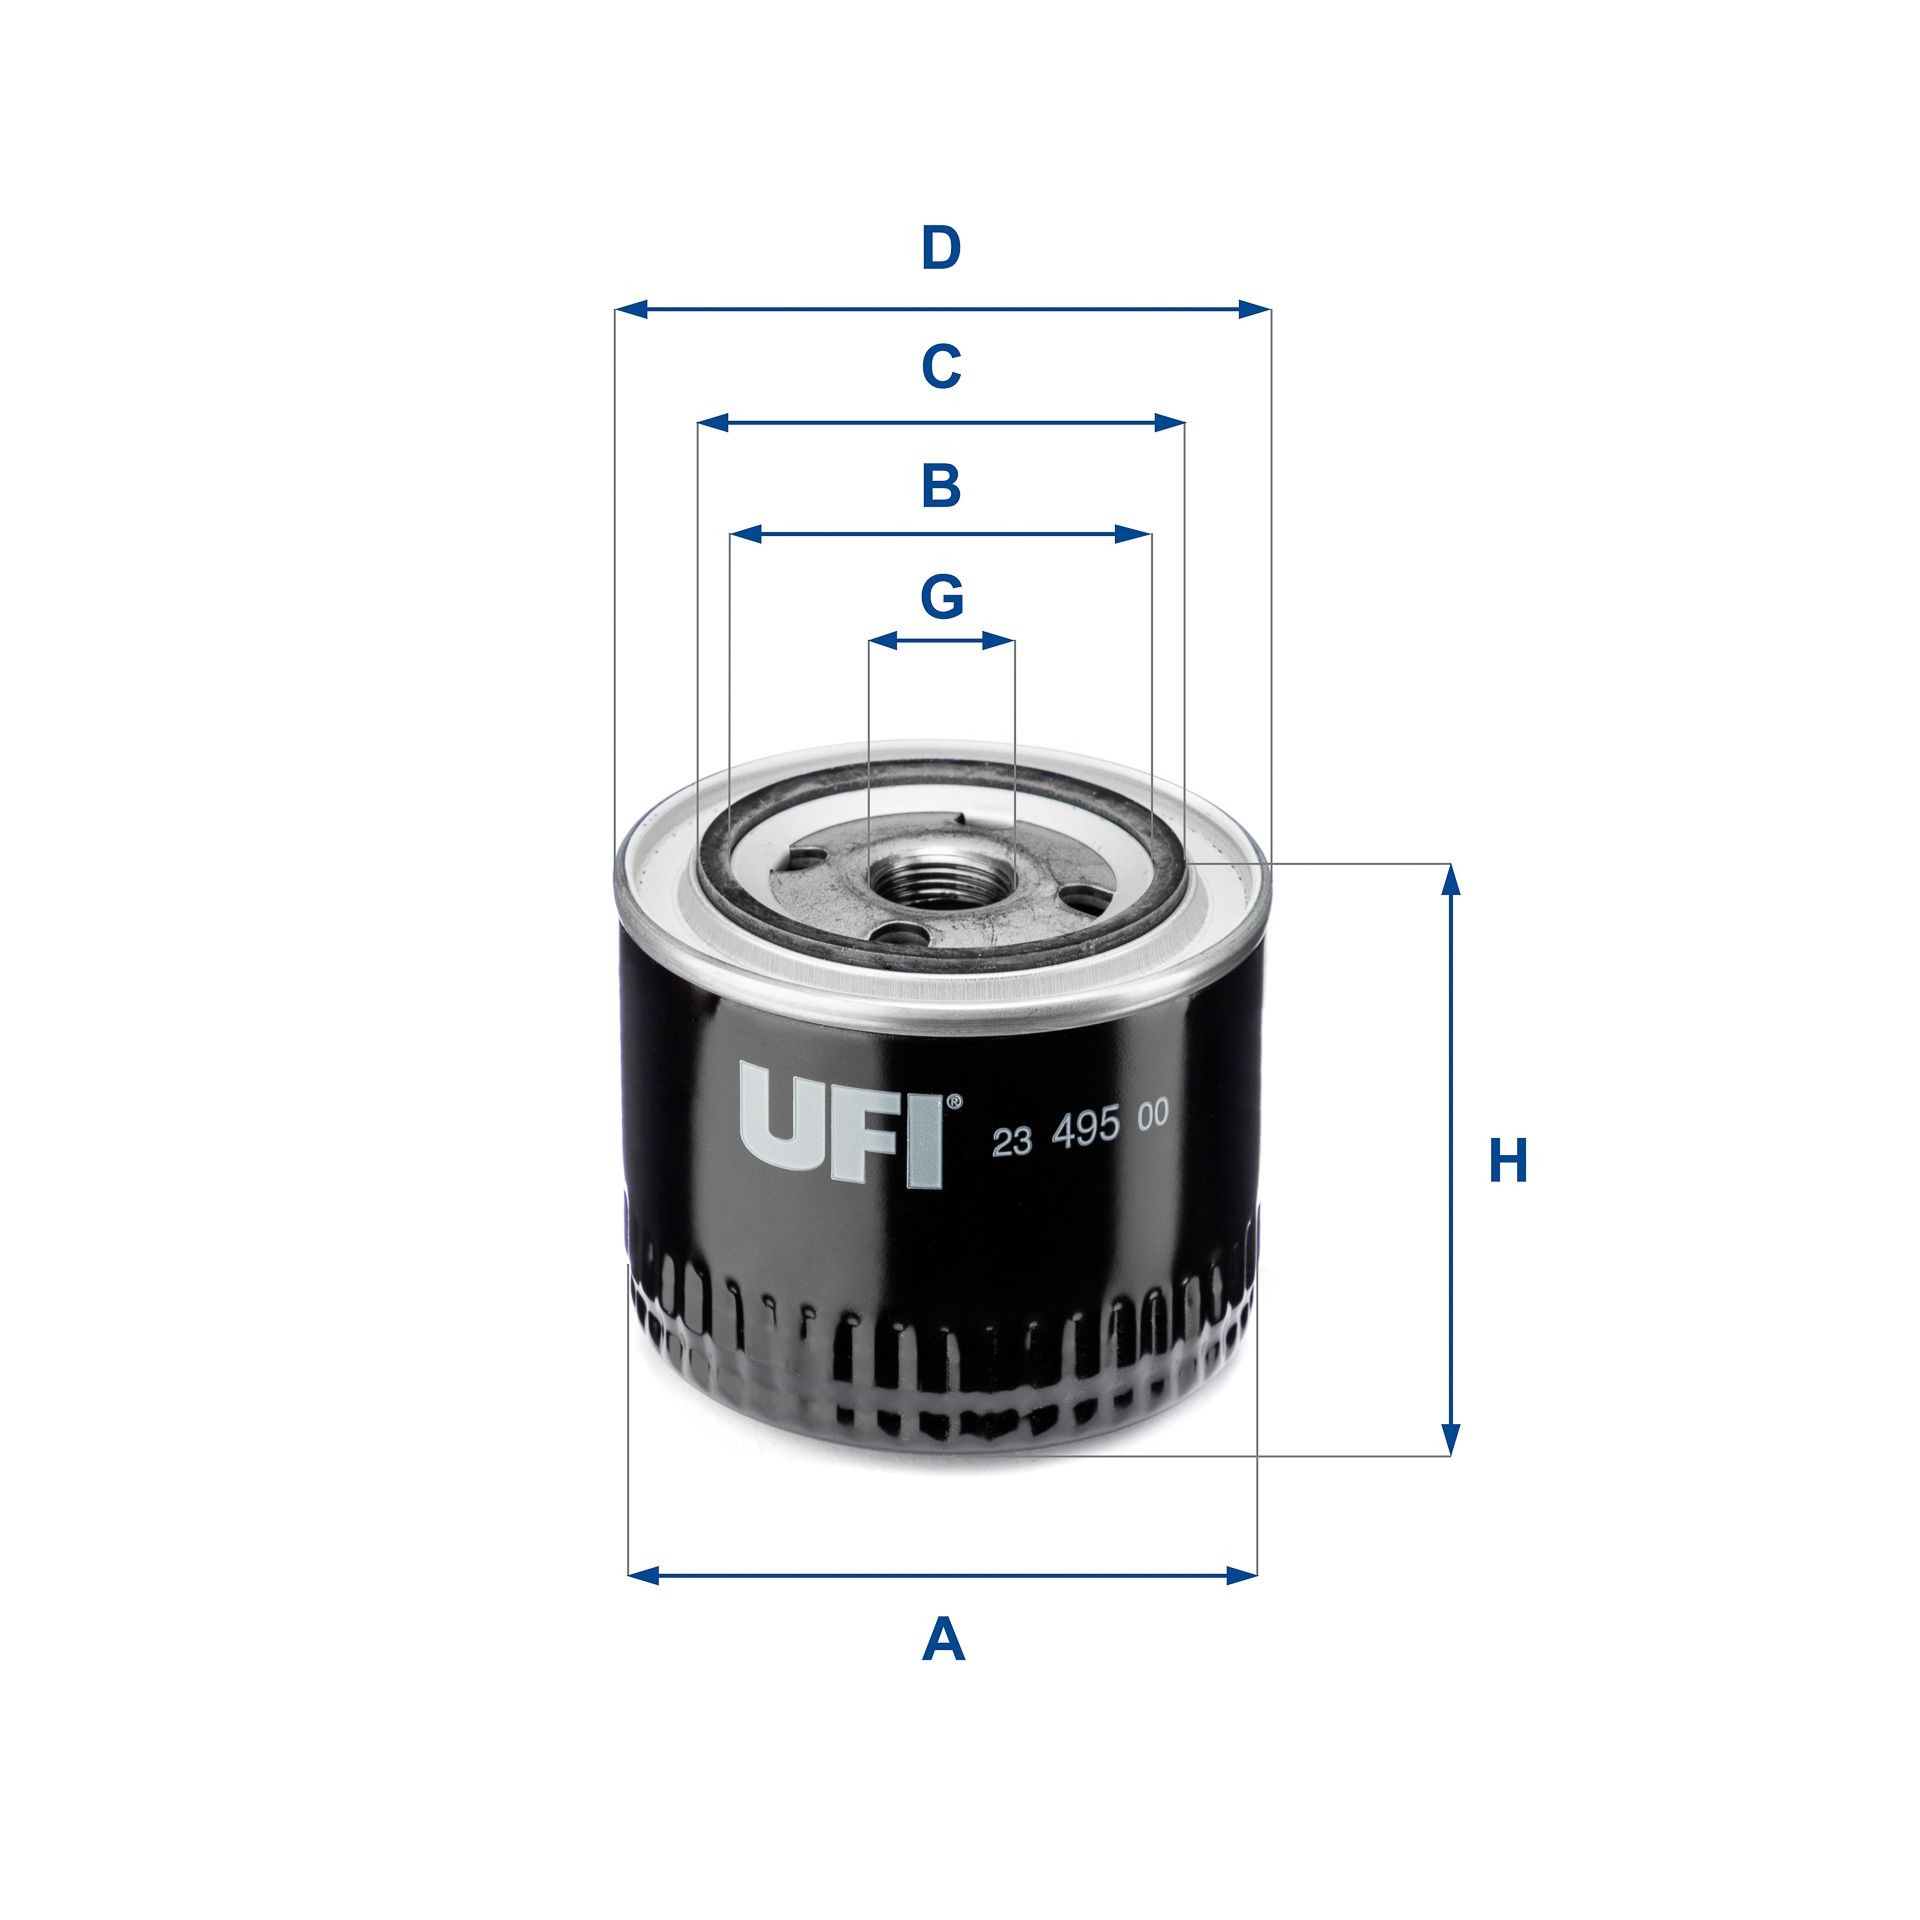 UFI 23.495.00 Oil filter 13/16-16 UNF, Spin-on Filter